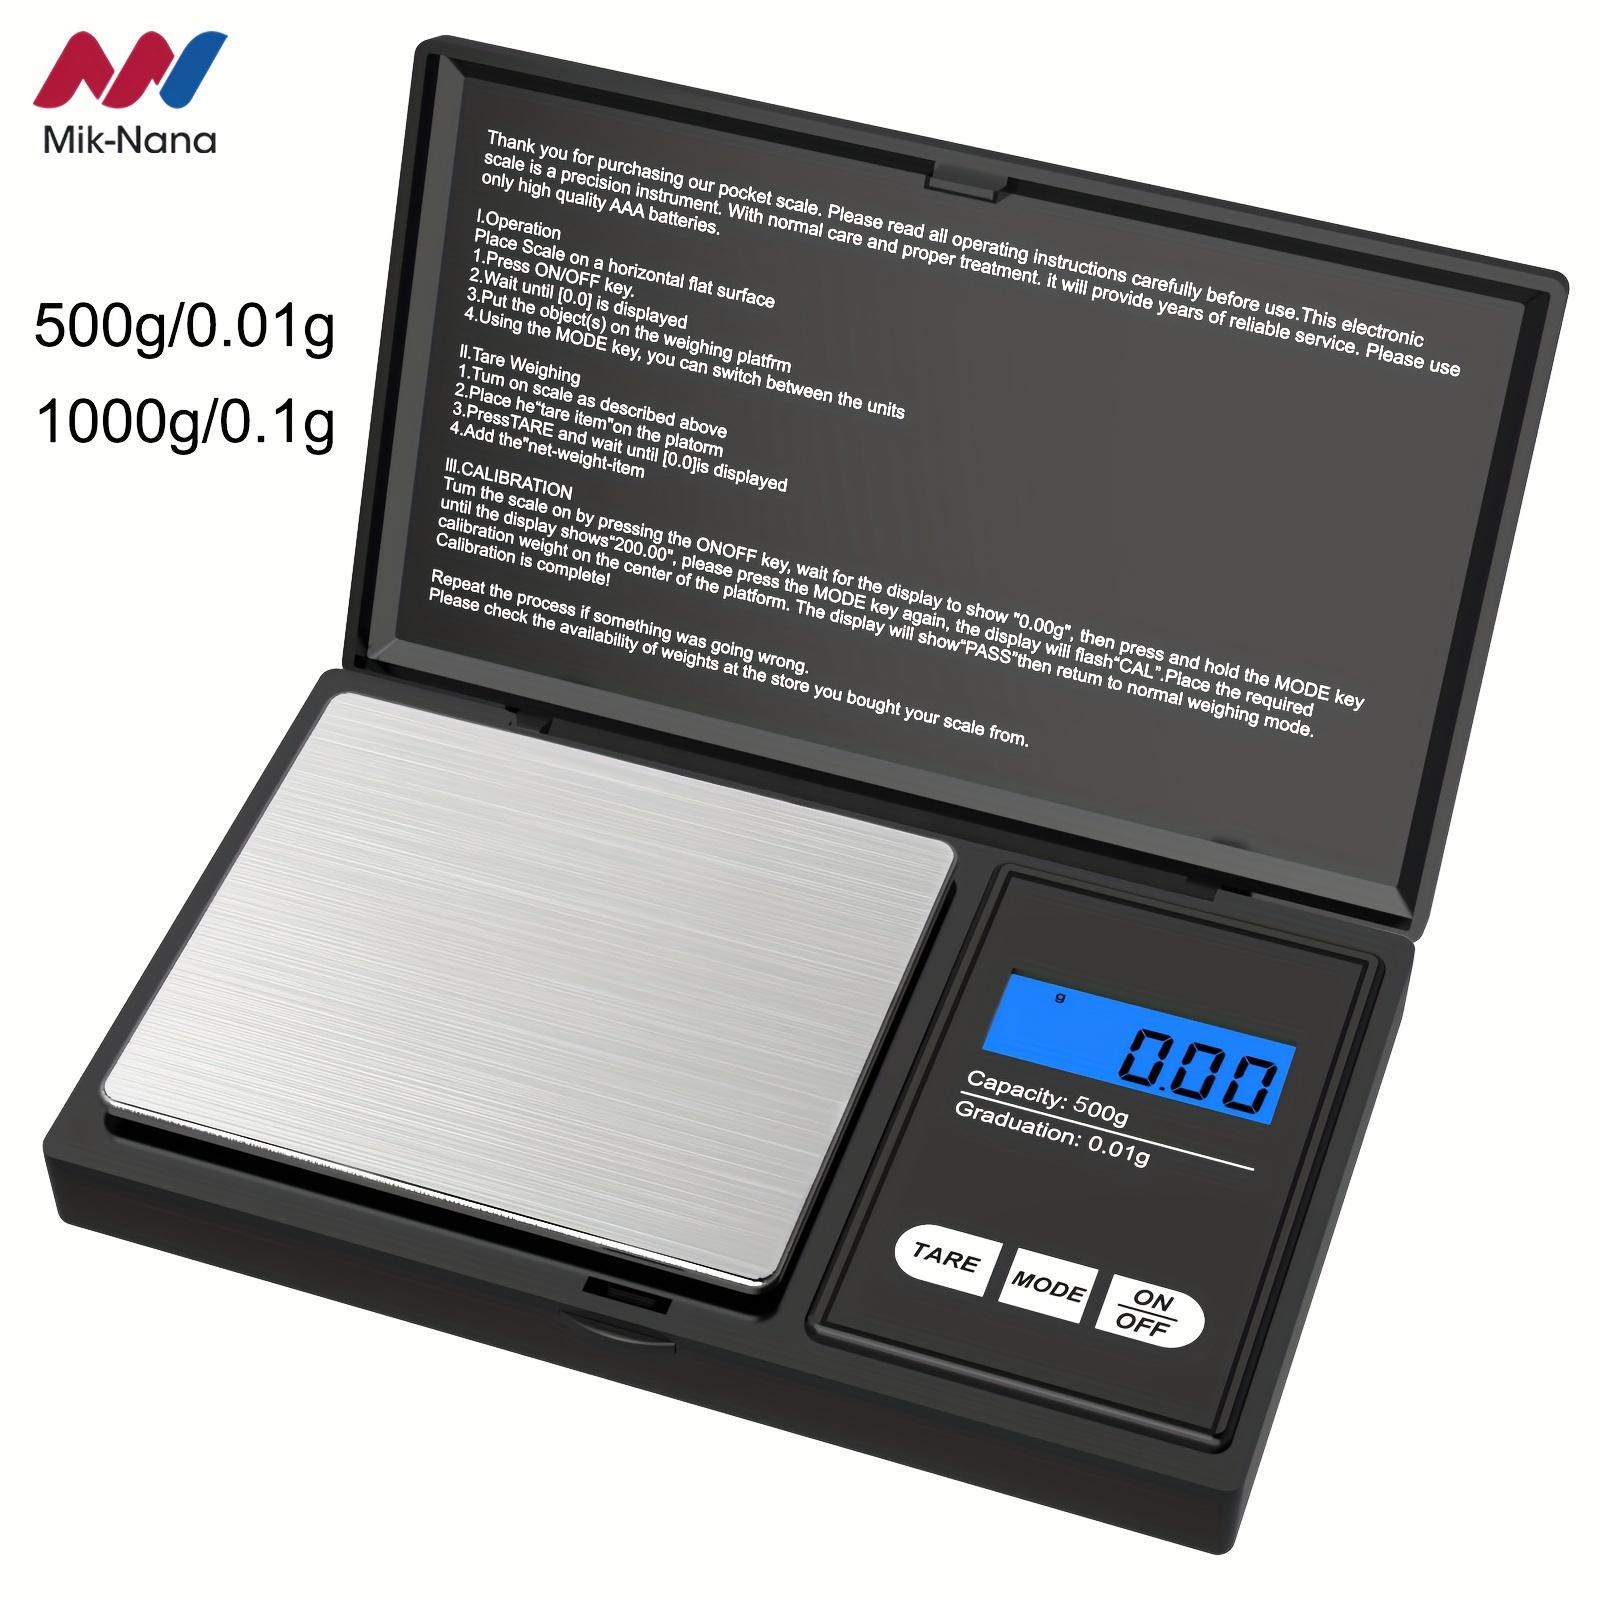 American Weigh Scales CHROME-1KG 1000 x 0.1g Digital Pocket Scale - Chrome